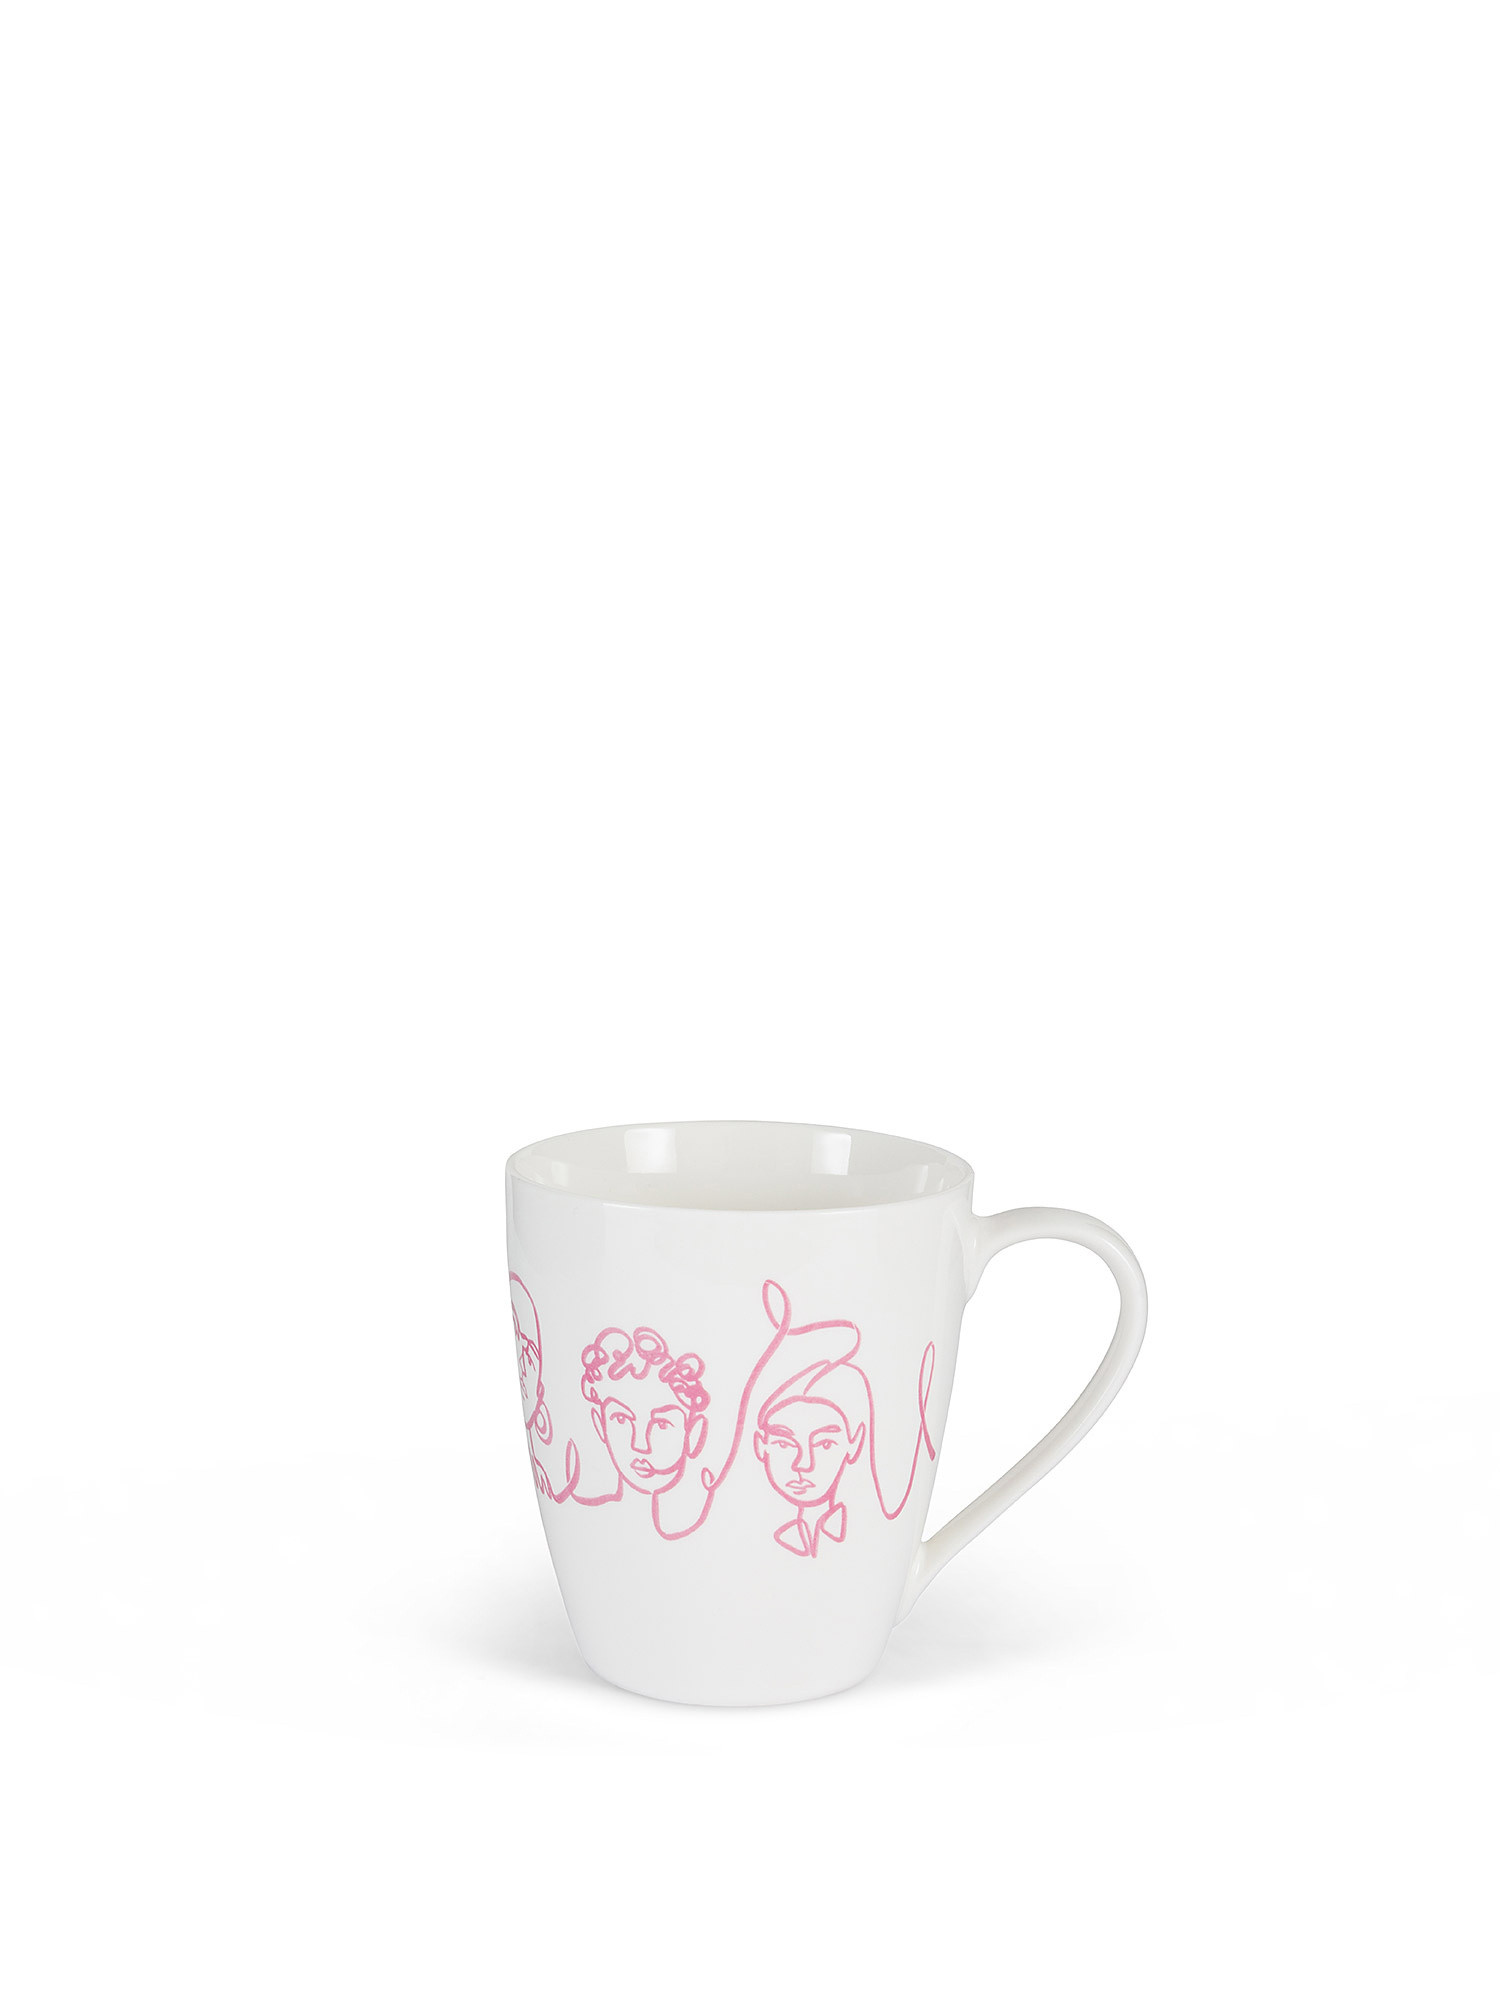 Coincasa mug for AIRC, White, large image number 0